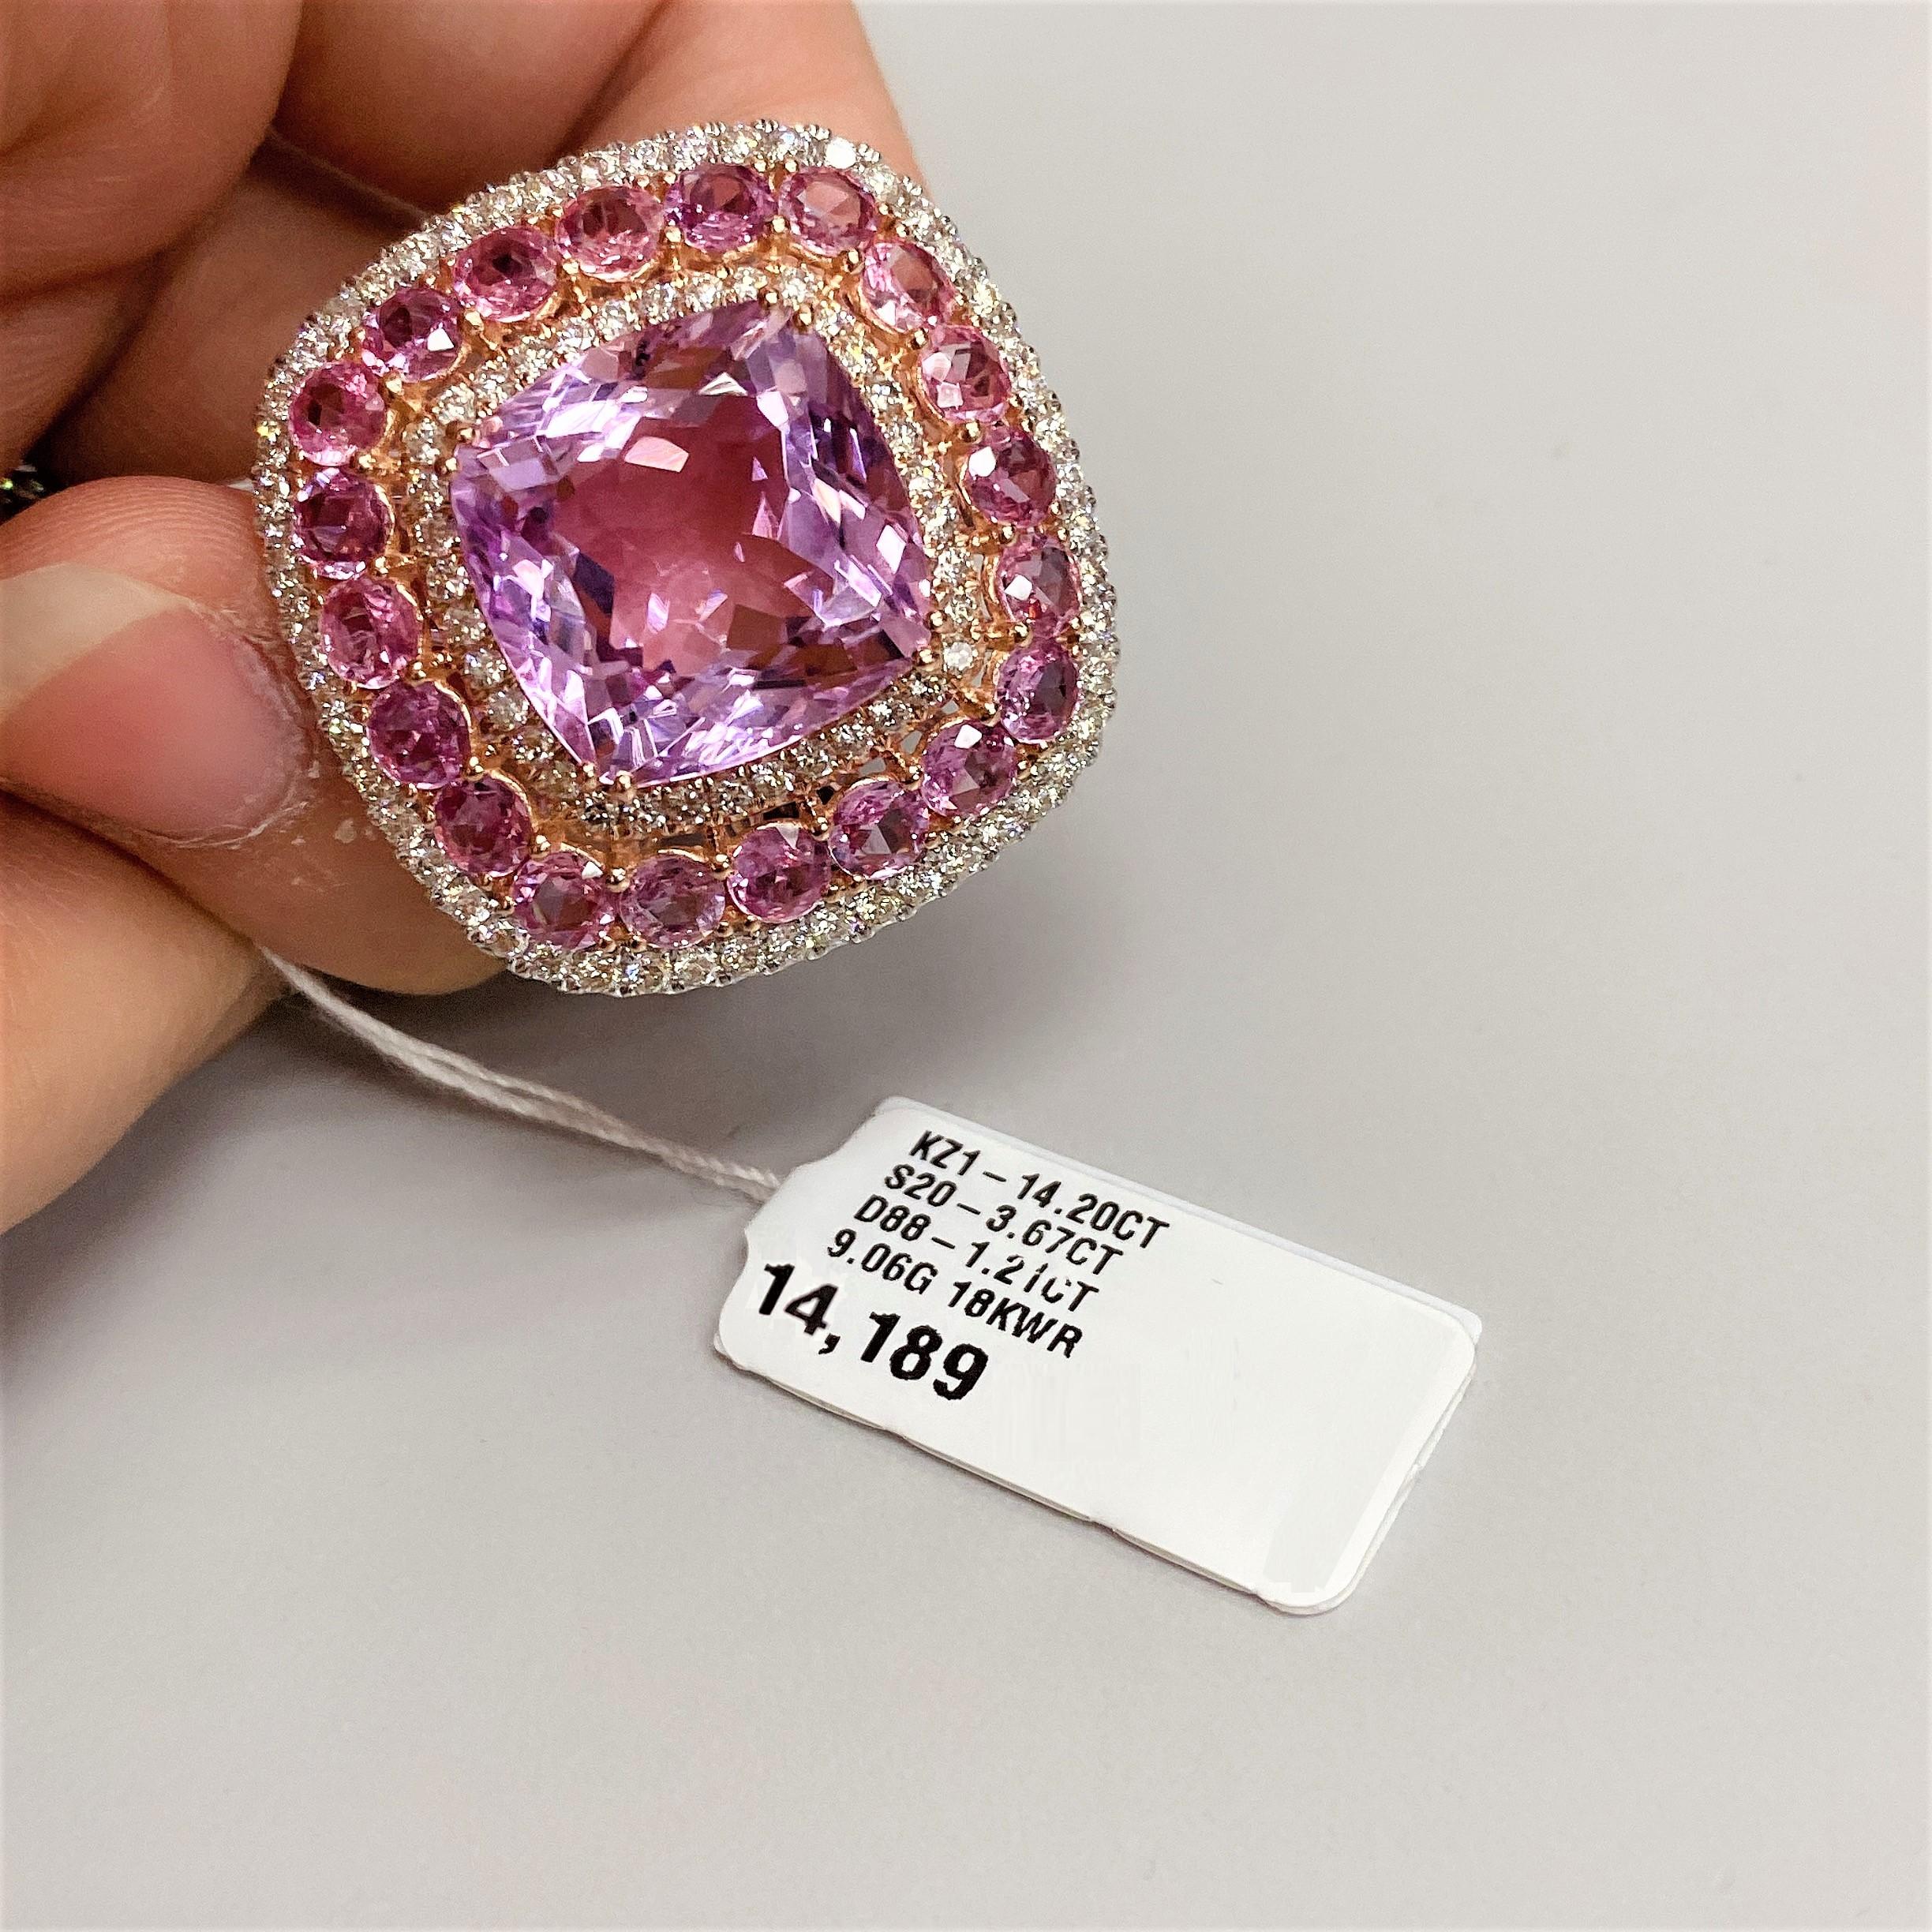 Mixed Cut NWT 14, 189 18KT Fancy Glittering 18.50ct Kunzite Pink Sapphire Diamond Ring For Sale